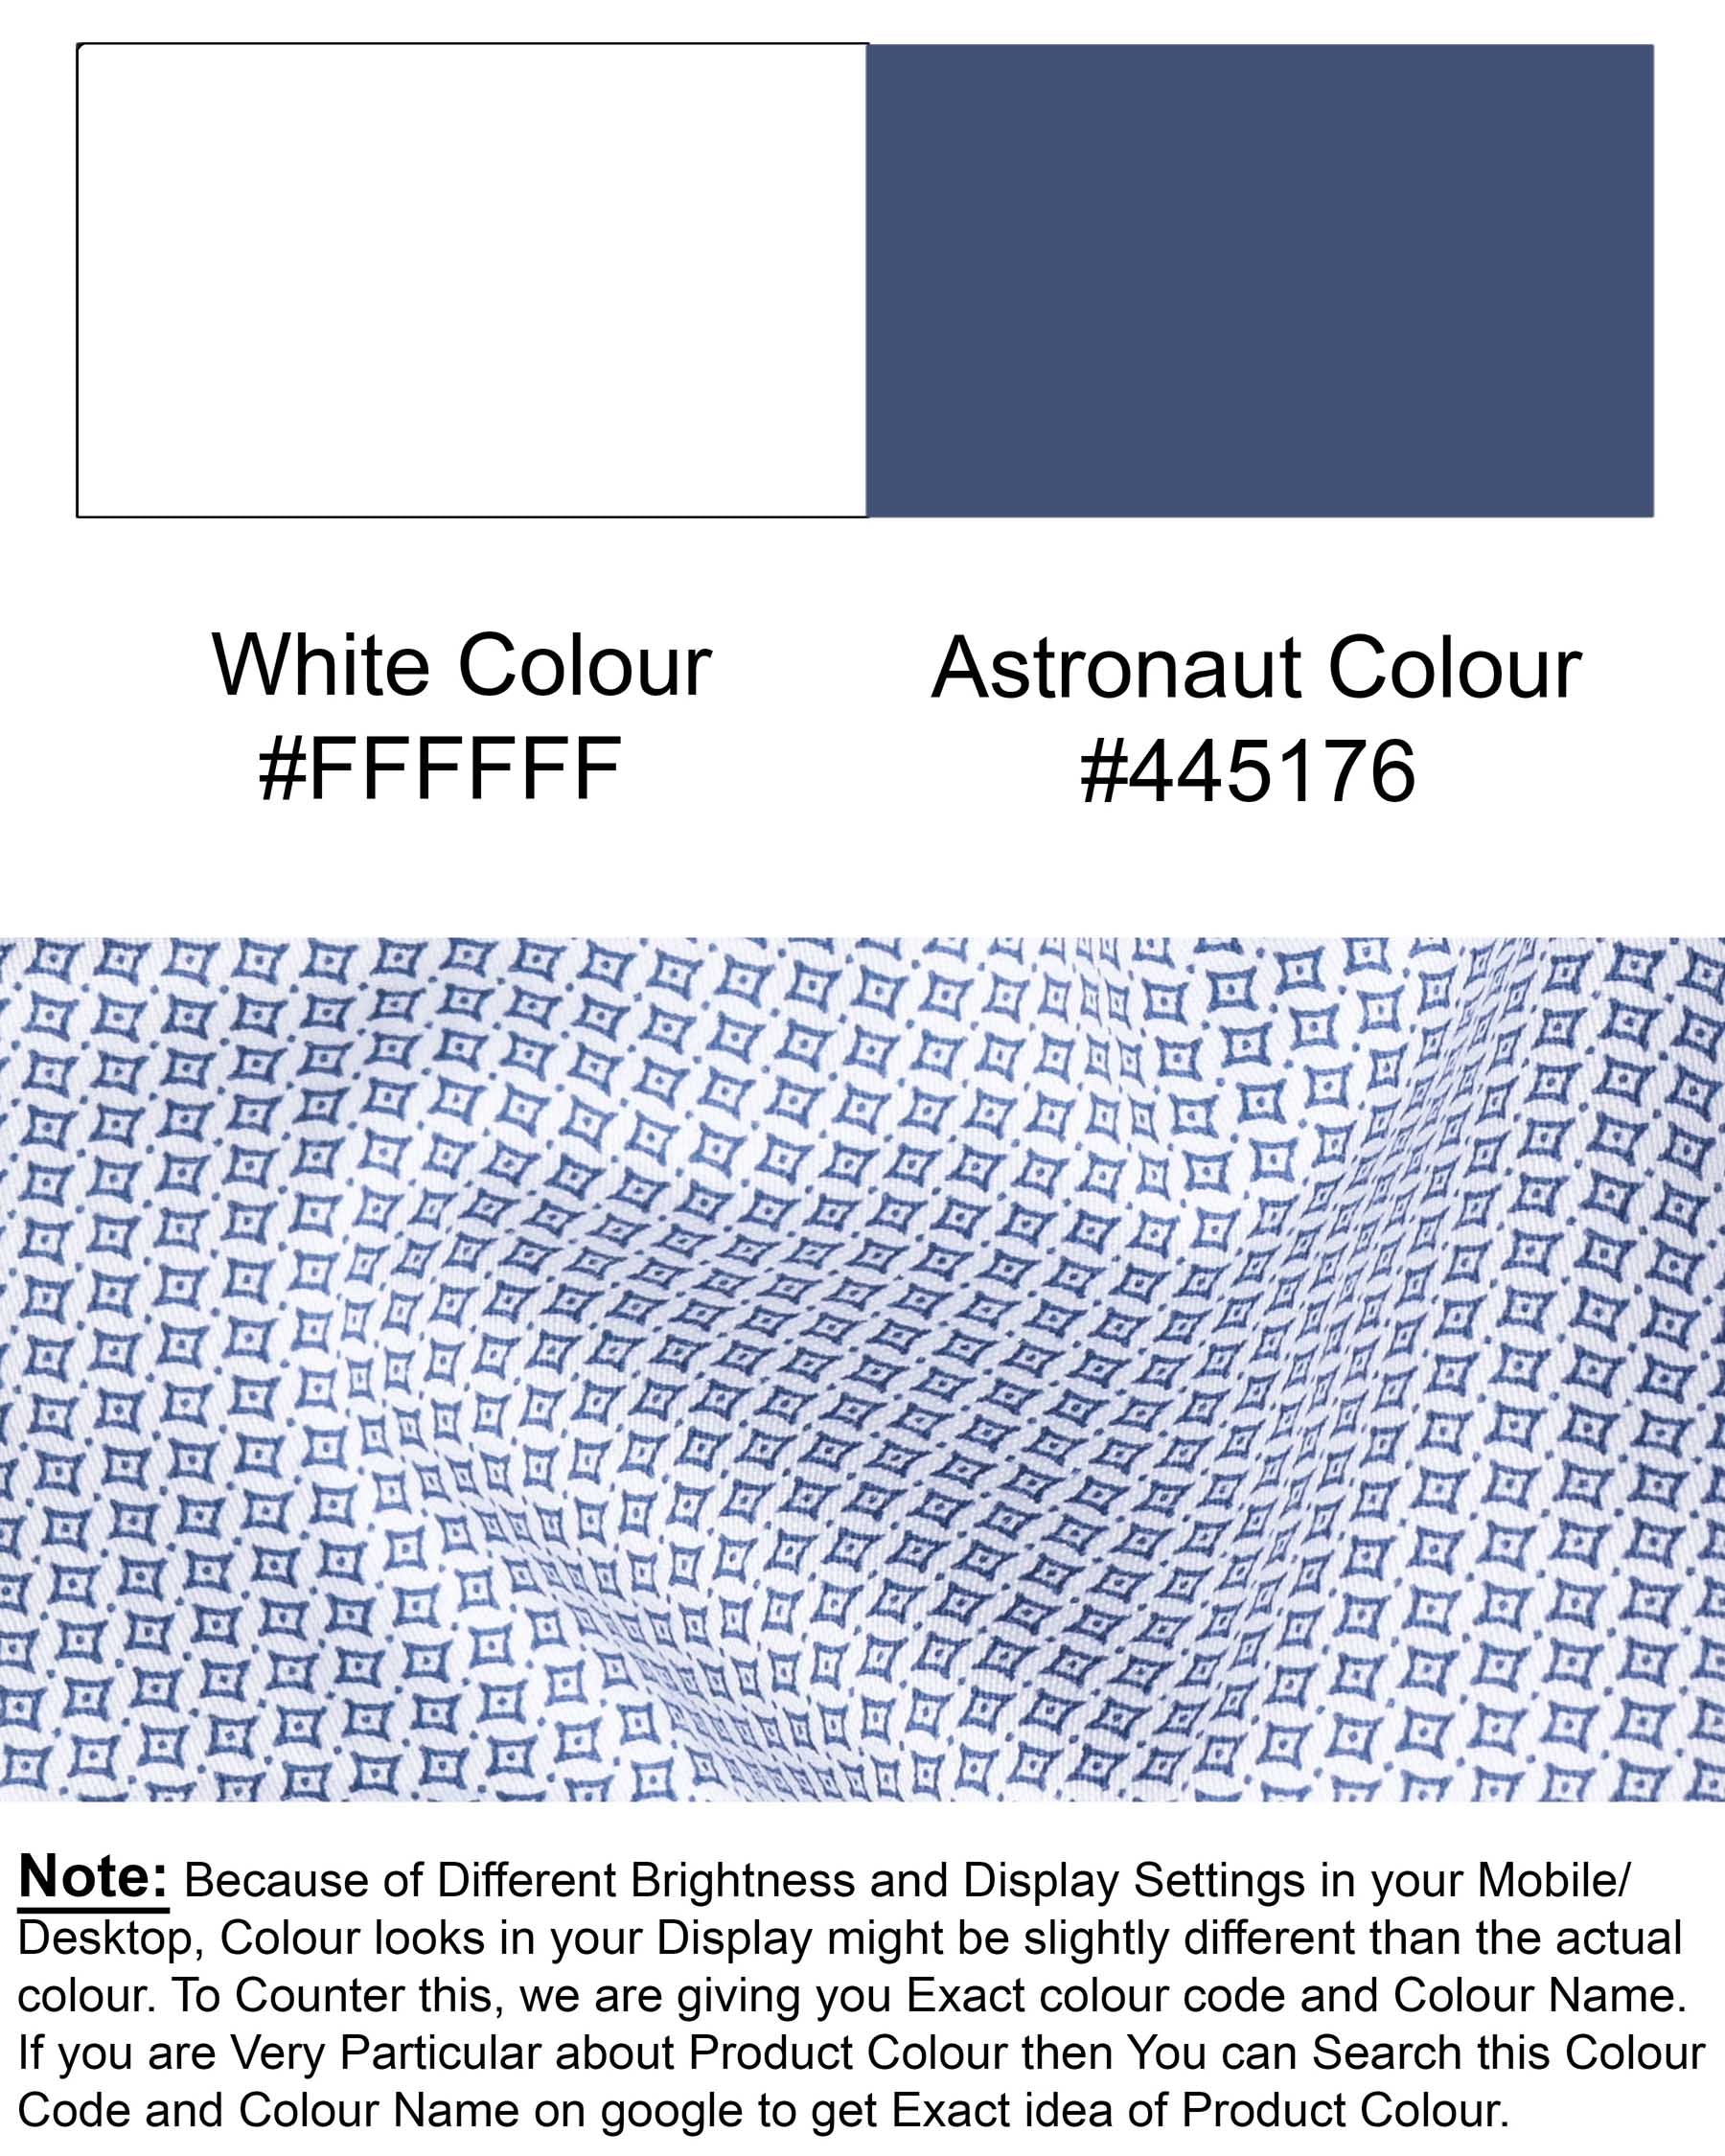 Bright White and Astronaut Blue Printed Super Soft Premium Cotton Shirt 5894-BLE-38, 5894-BLE-H-38, 5894-BLE-39, 5894-BLE-H-39, 5894-BLE-40, 5894-BLE-H-40, 5894-BLE-42, 5894-BLE-H-42, 5894-BLE-44, 5894-BLE-H-44, 5894-BLE-46, 5894-BLE-H-46, 5894-BLE-48, 5894-BLE-H-48, 5894-BLE-50, 5894-BLE-H-50, 5894-BLE-52, 5894-BLE-H-52